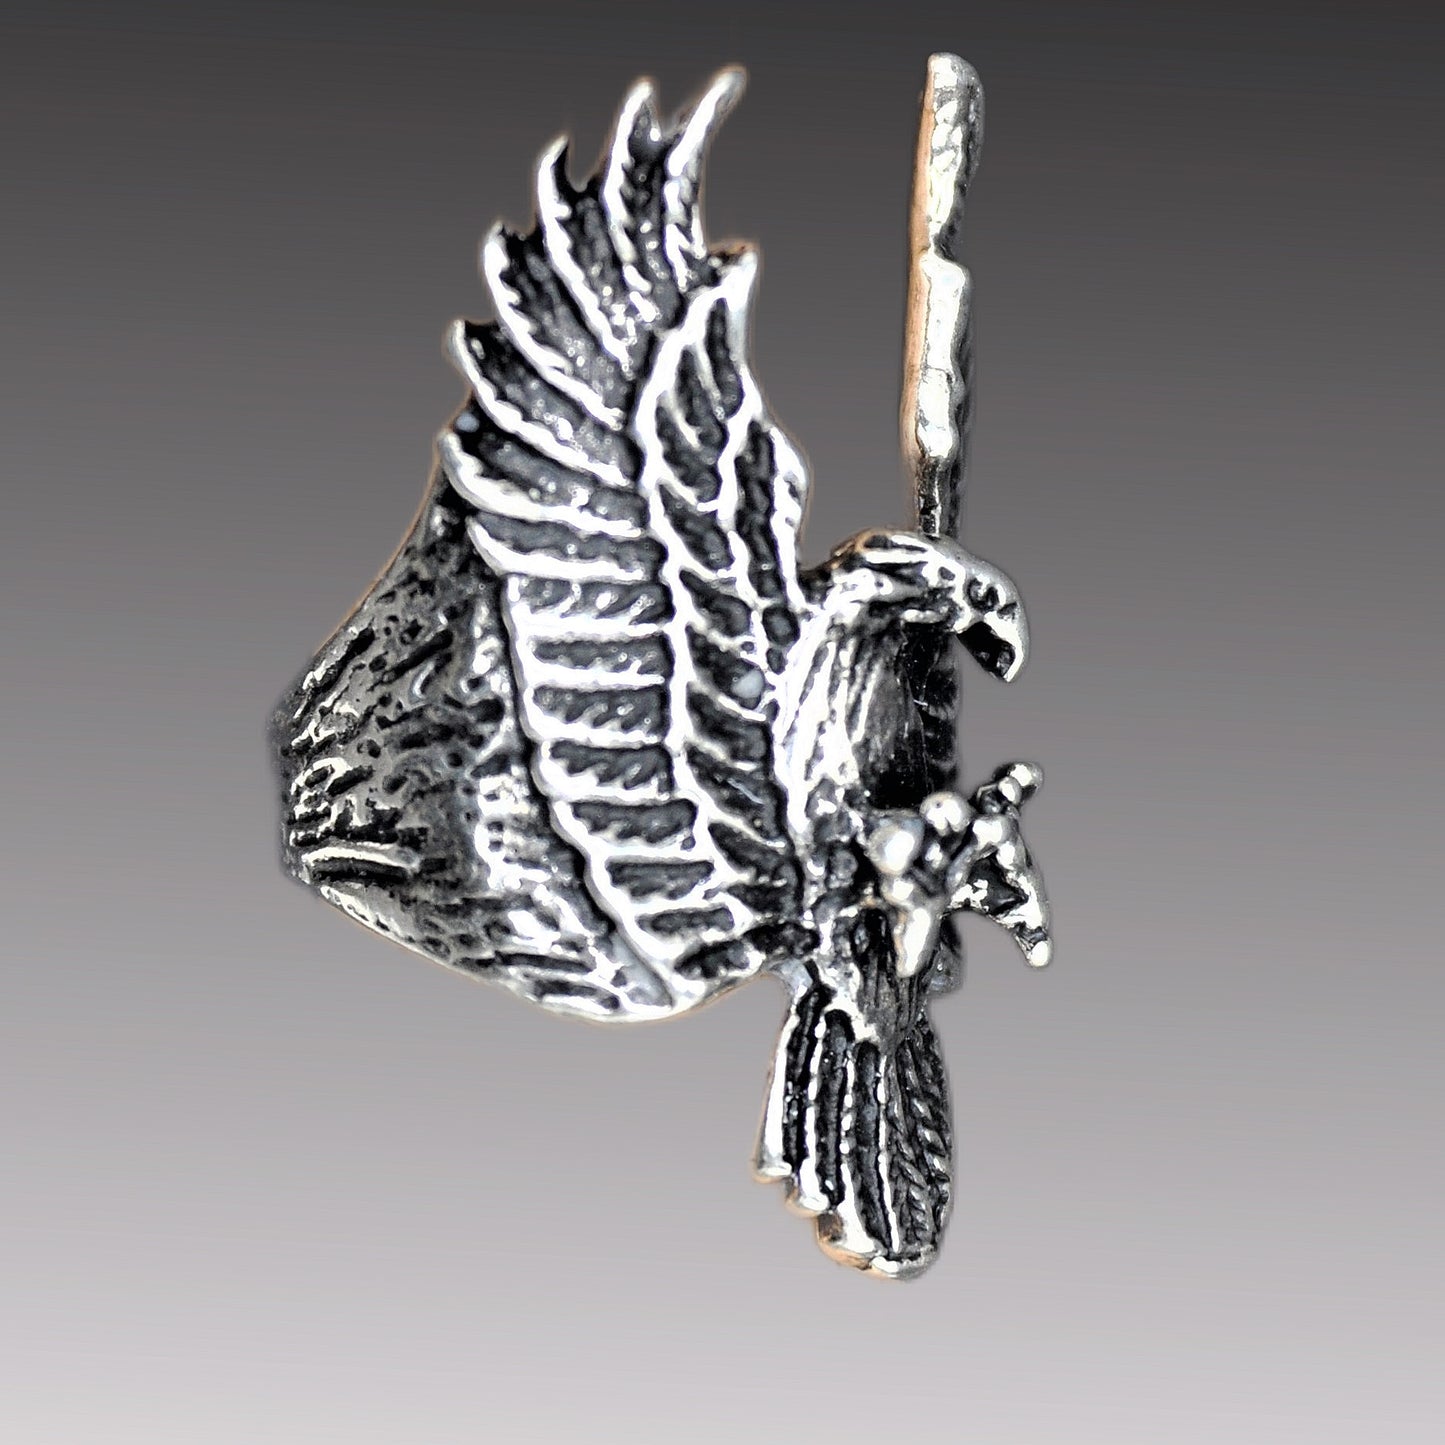 Eagle Ring, Sterling Silver Eagle, Size 8 through 15, endangered species.